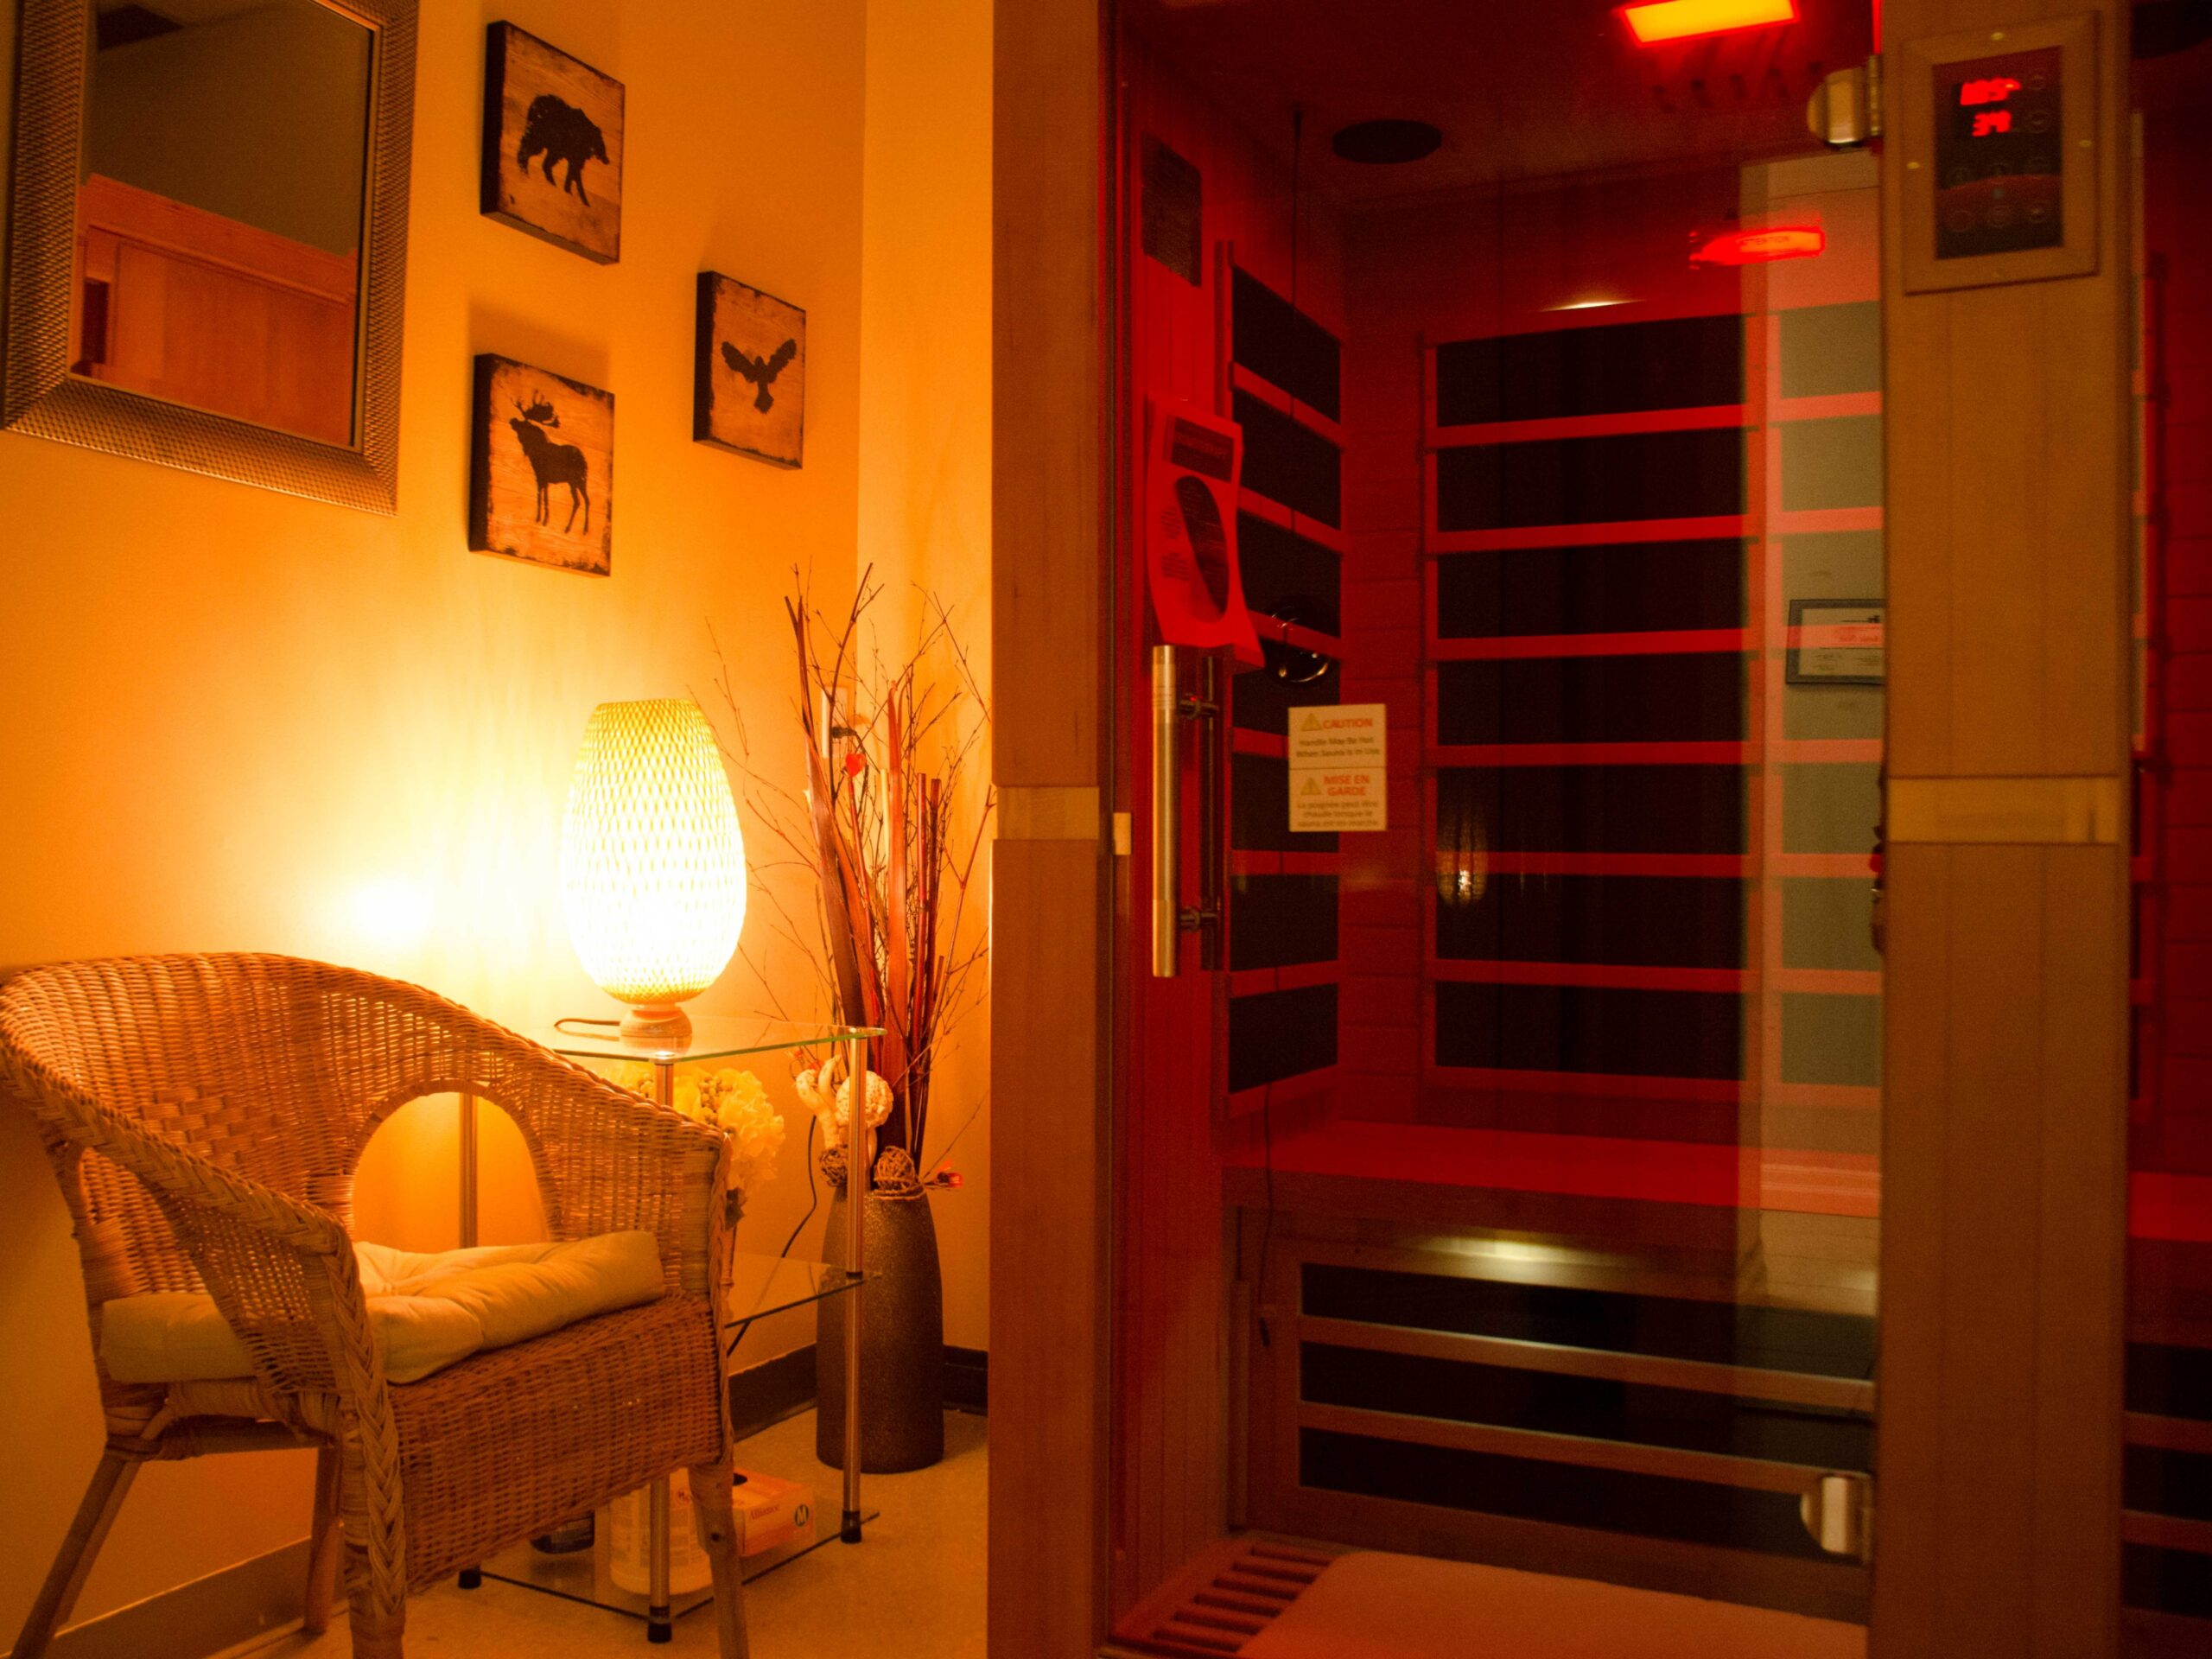 infrared sauna has many health benefits